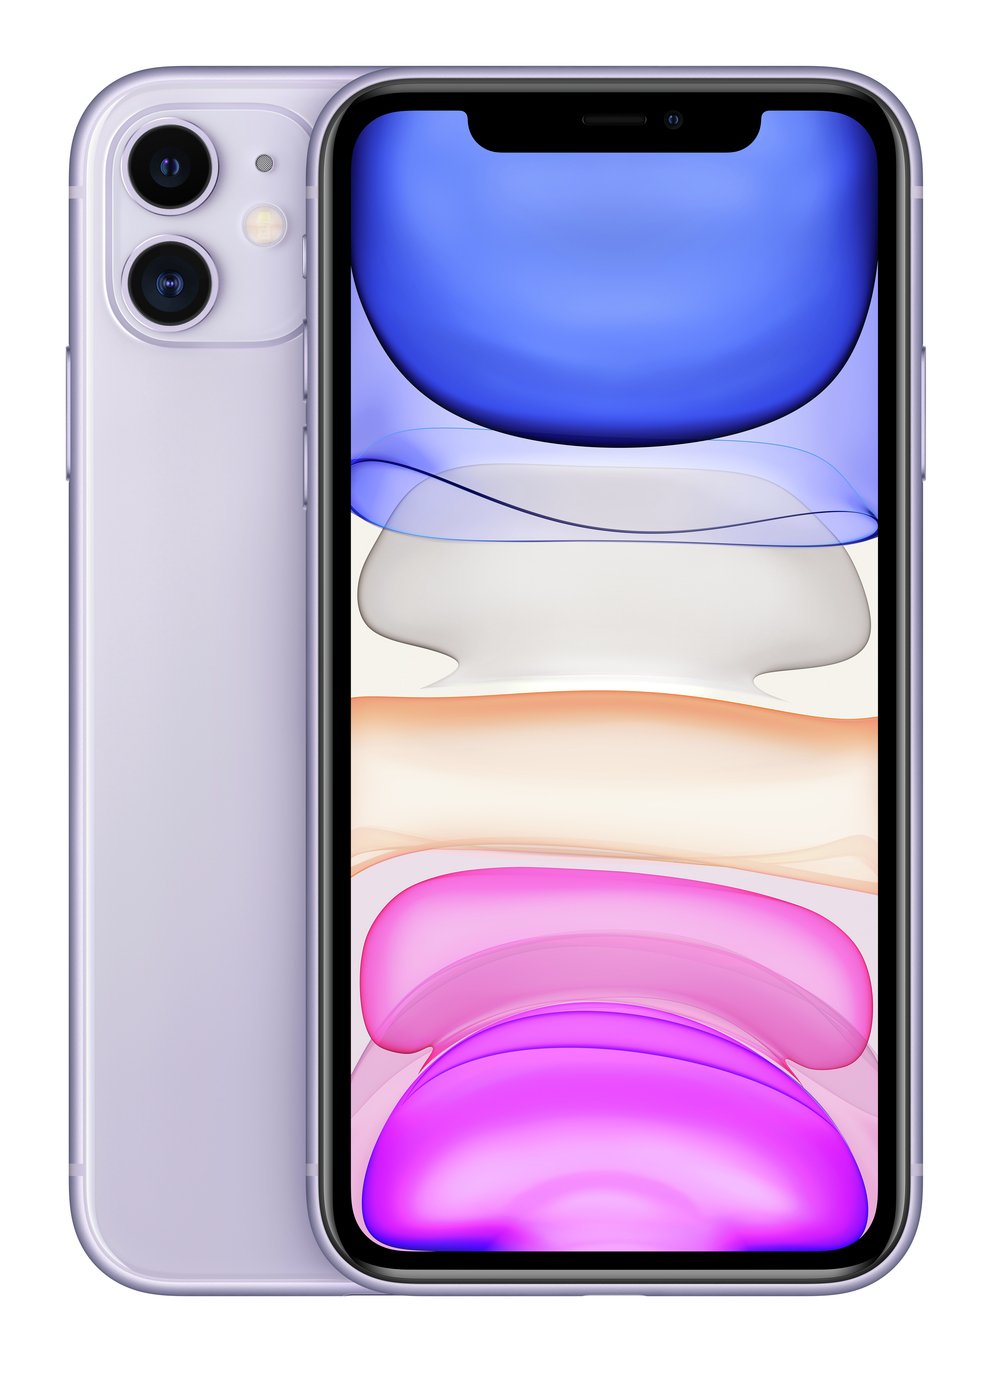 SIM Free iPhone 11 64GB Mobile Phone - Purple.